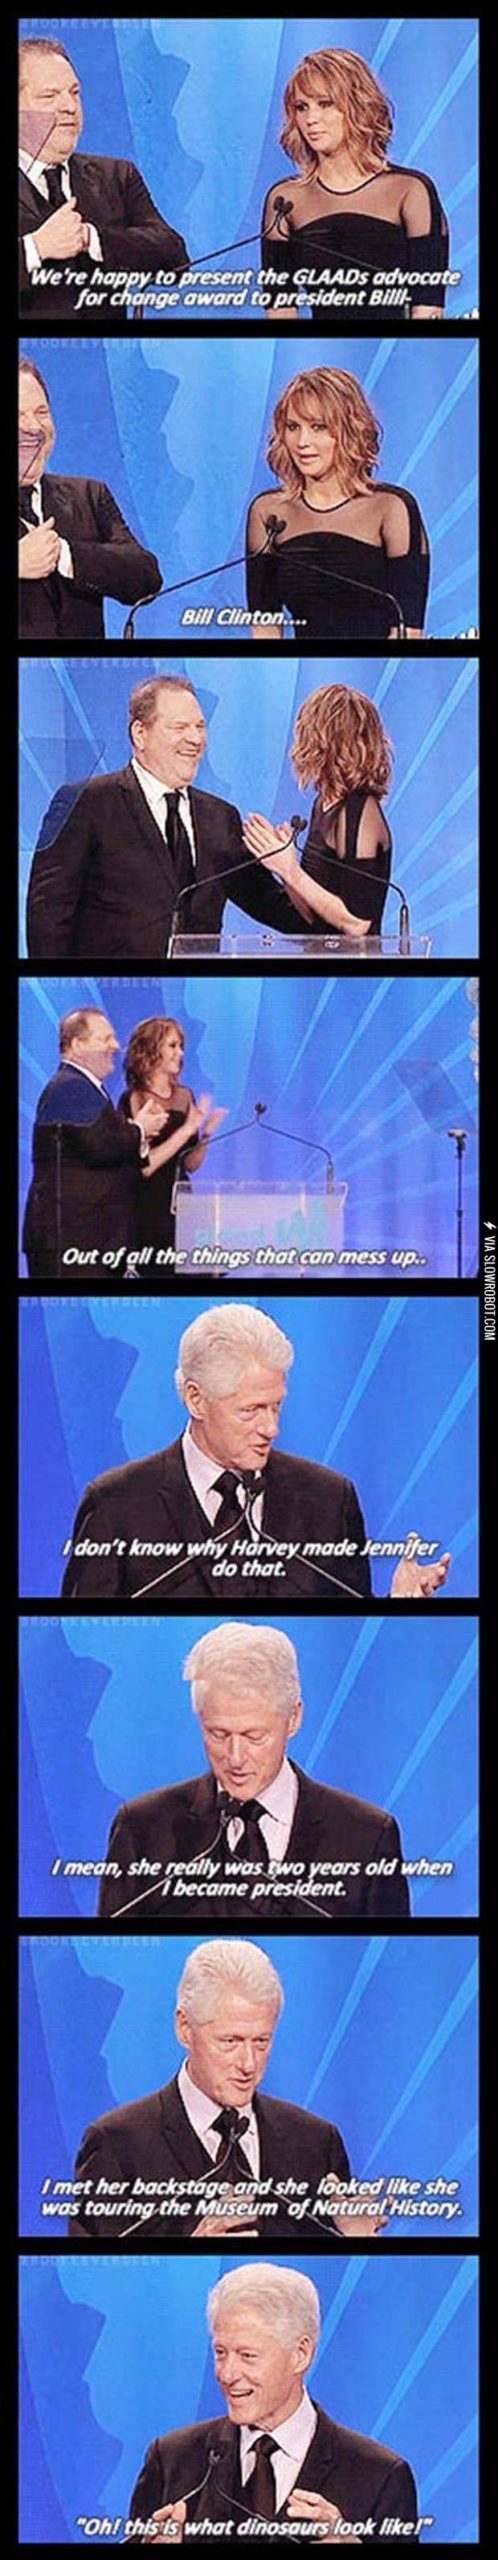 Bill+Clinton+%26amp%3B+Jennifer+Lawrence